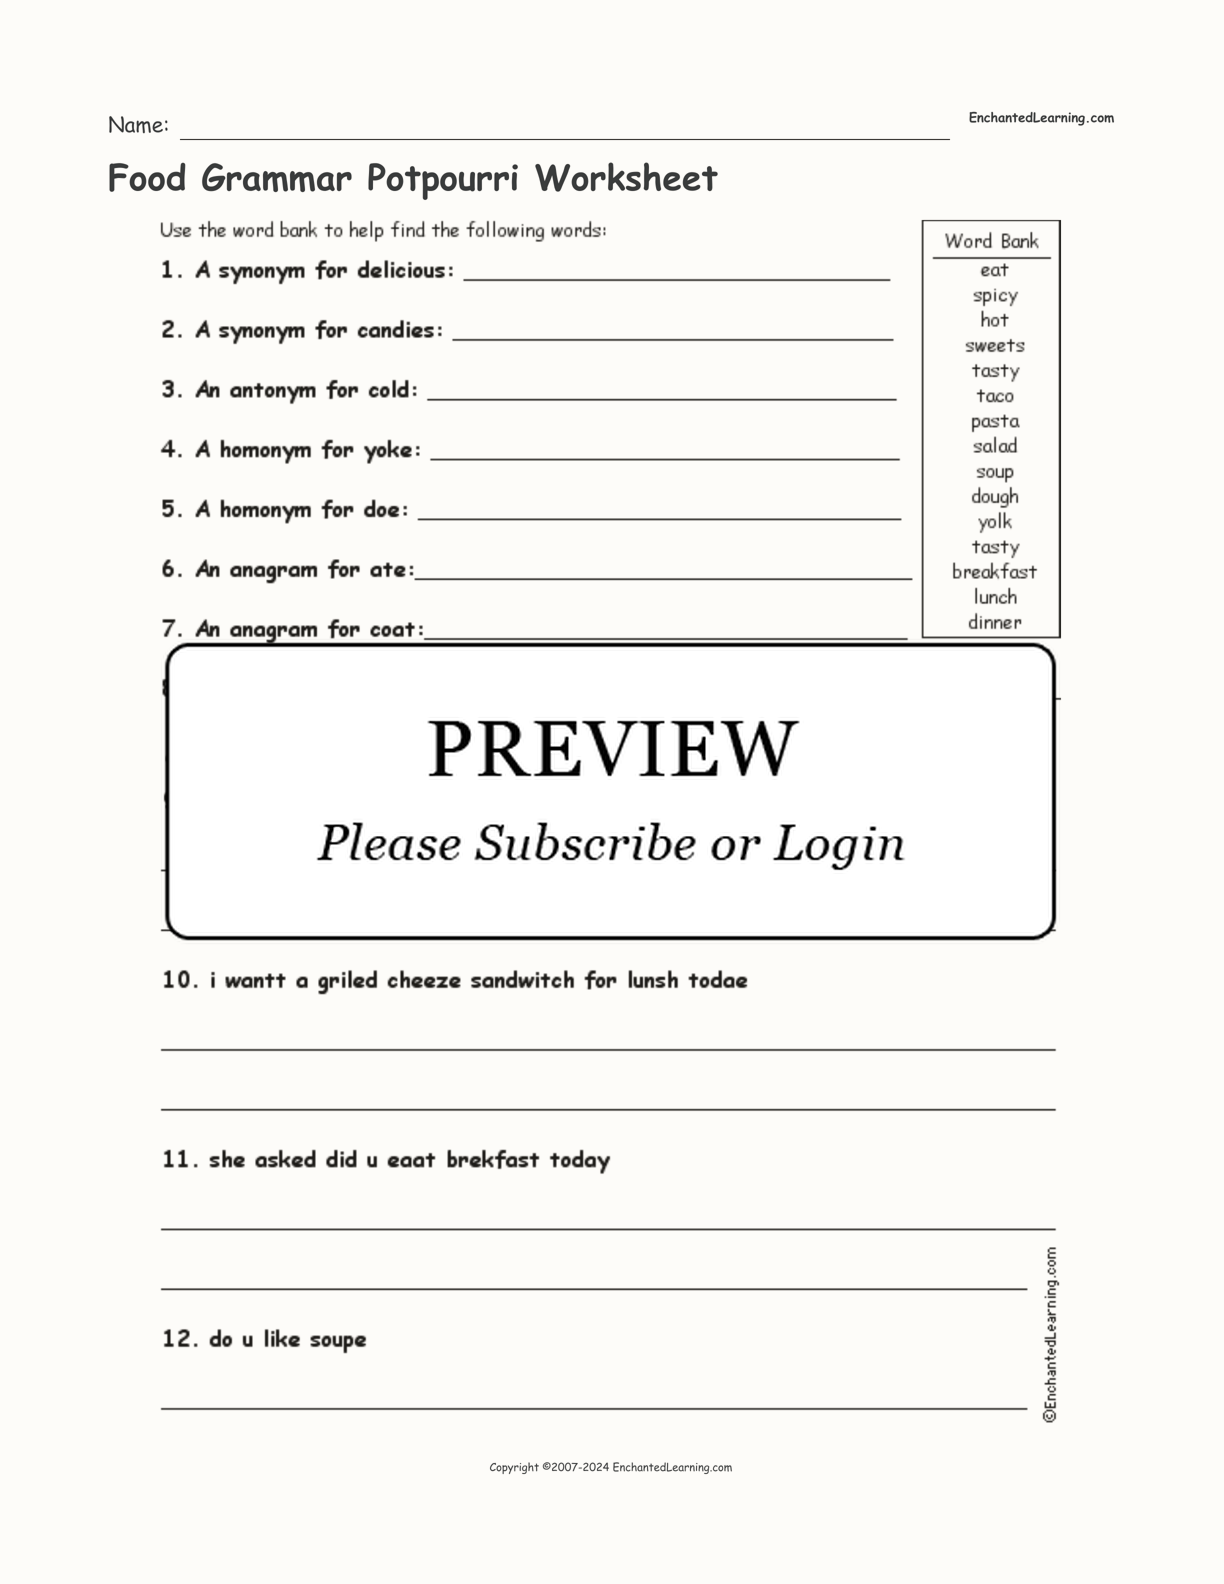 Food Grammar Potpourri Worksheet interactive worksheet page 1